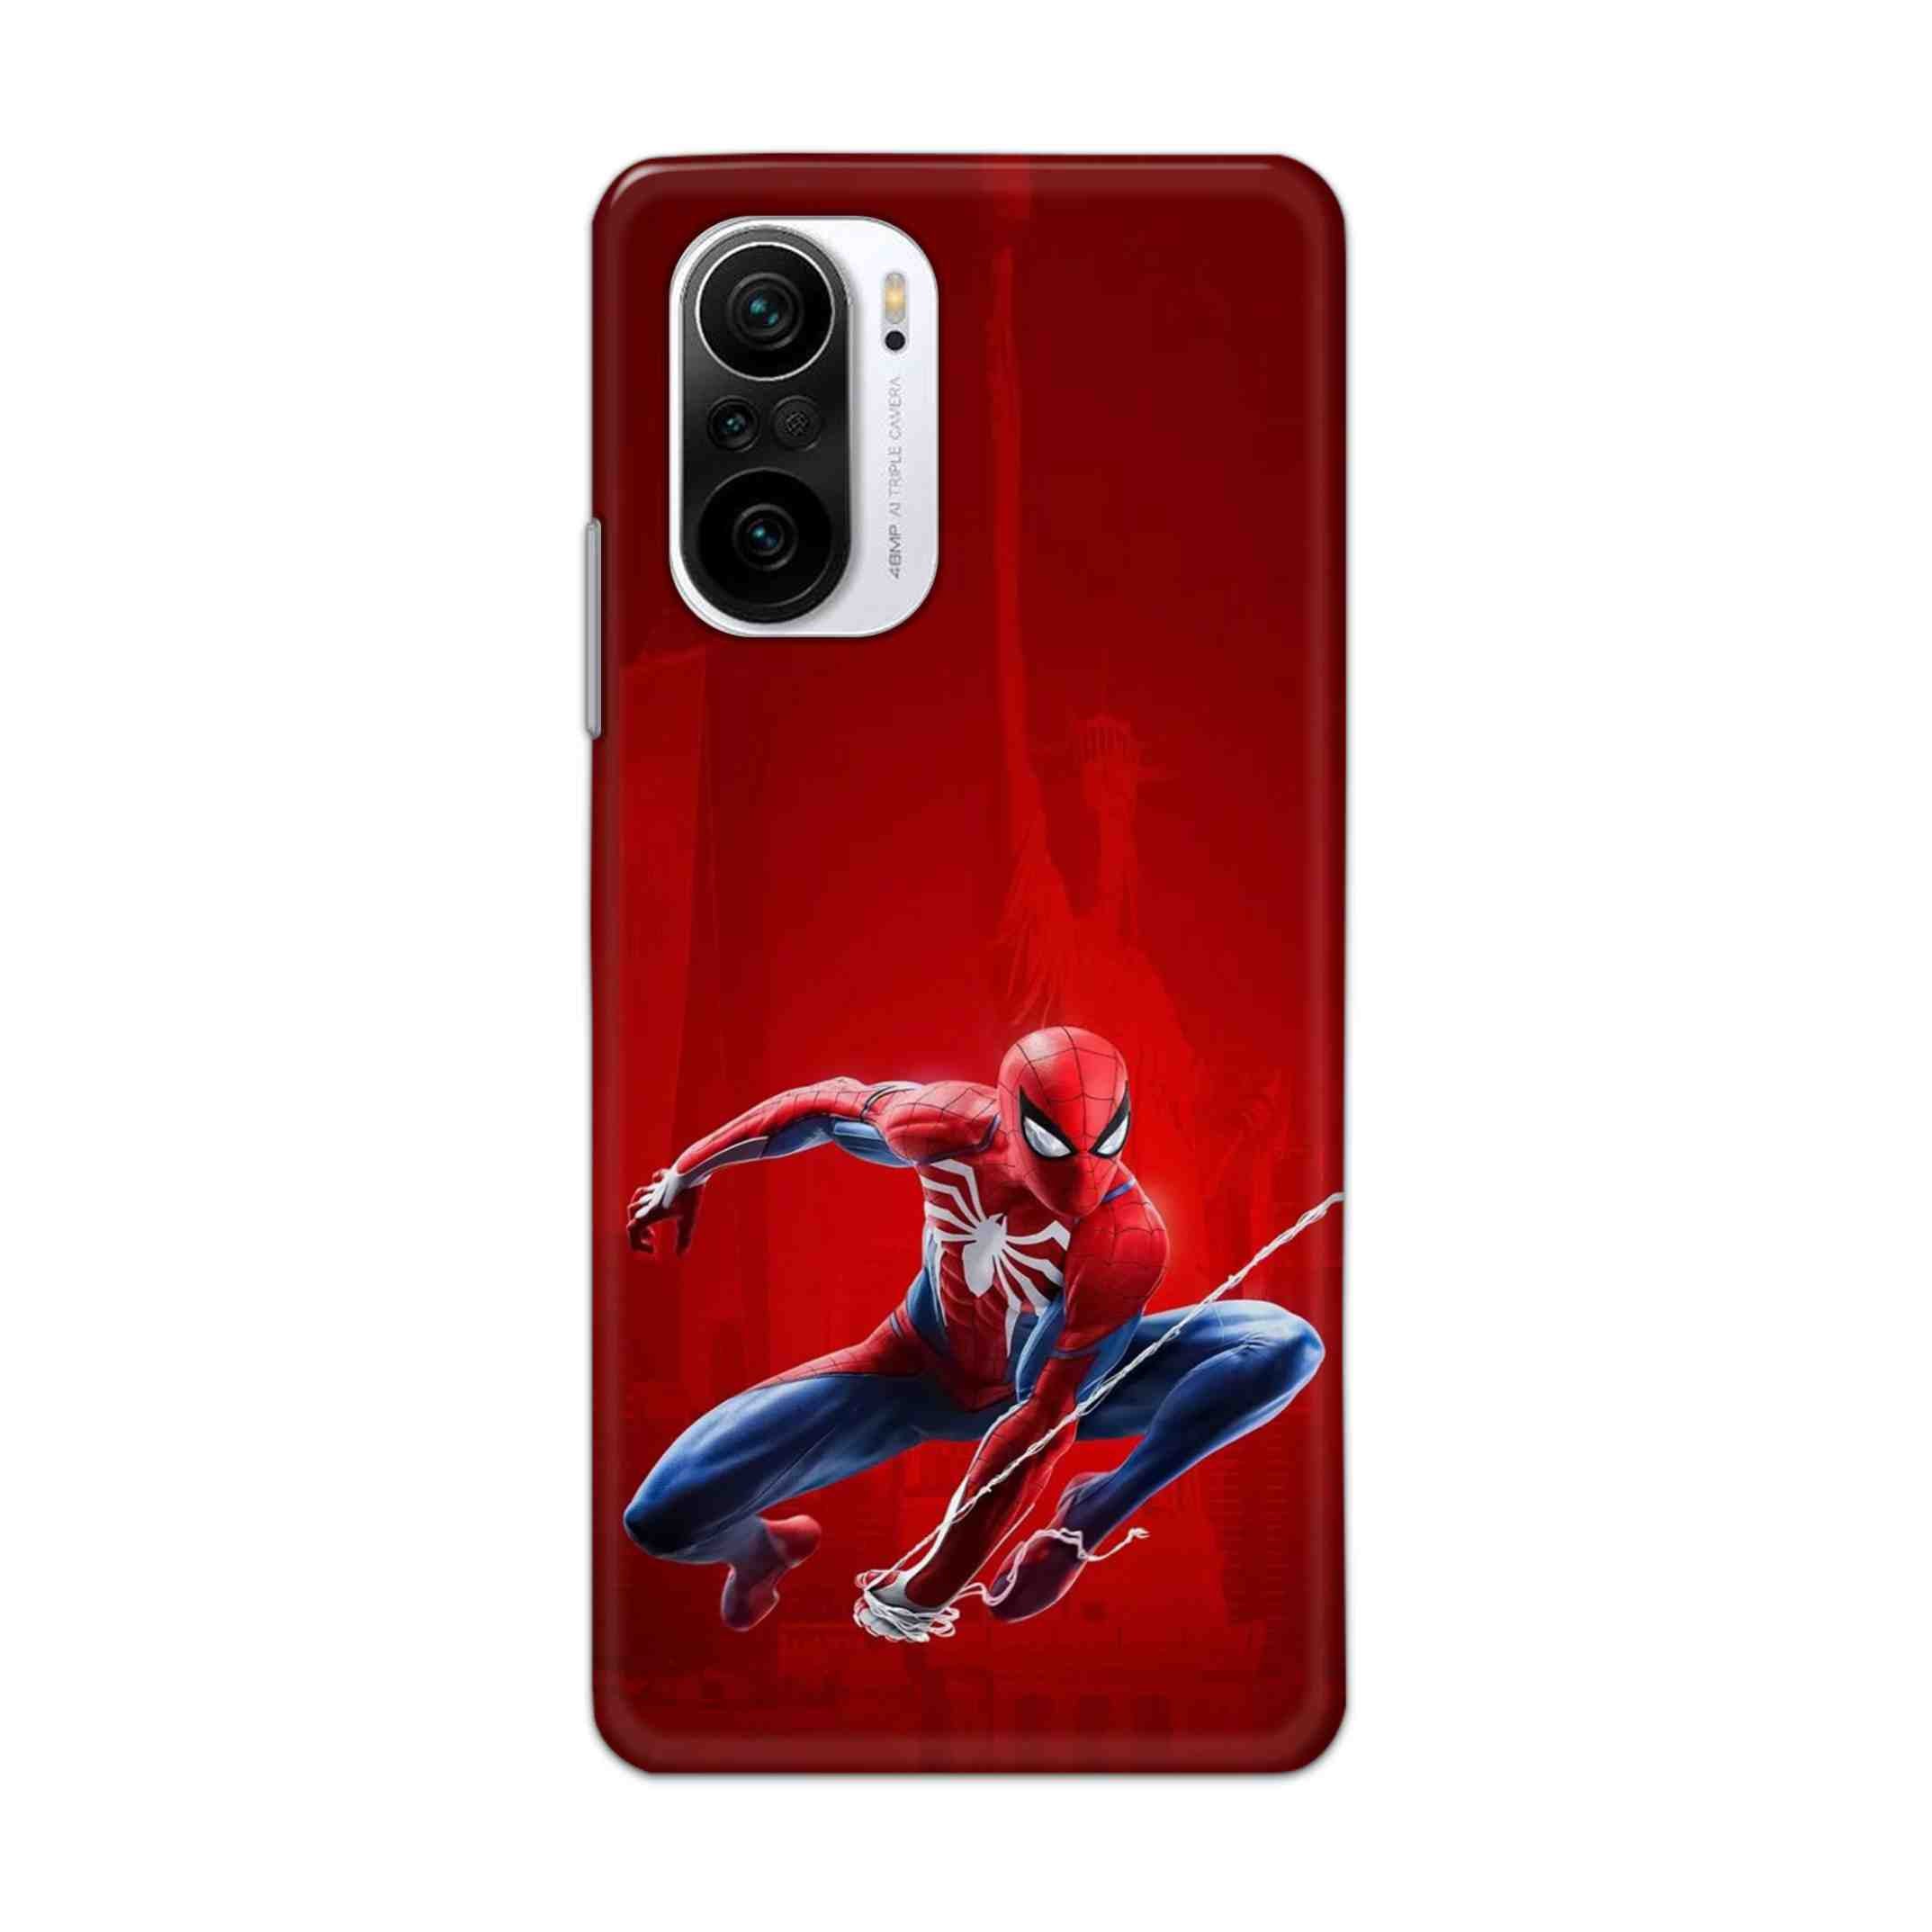 Buy Spiderman Hard Back Mobile Phone Case Cover For Mi 11X Online